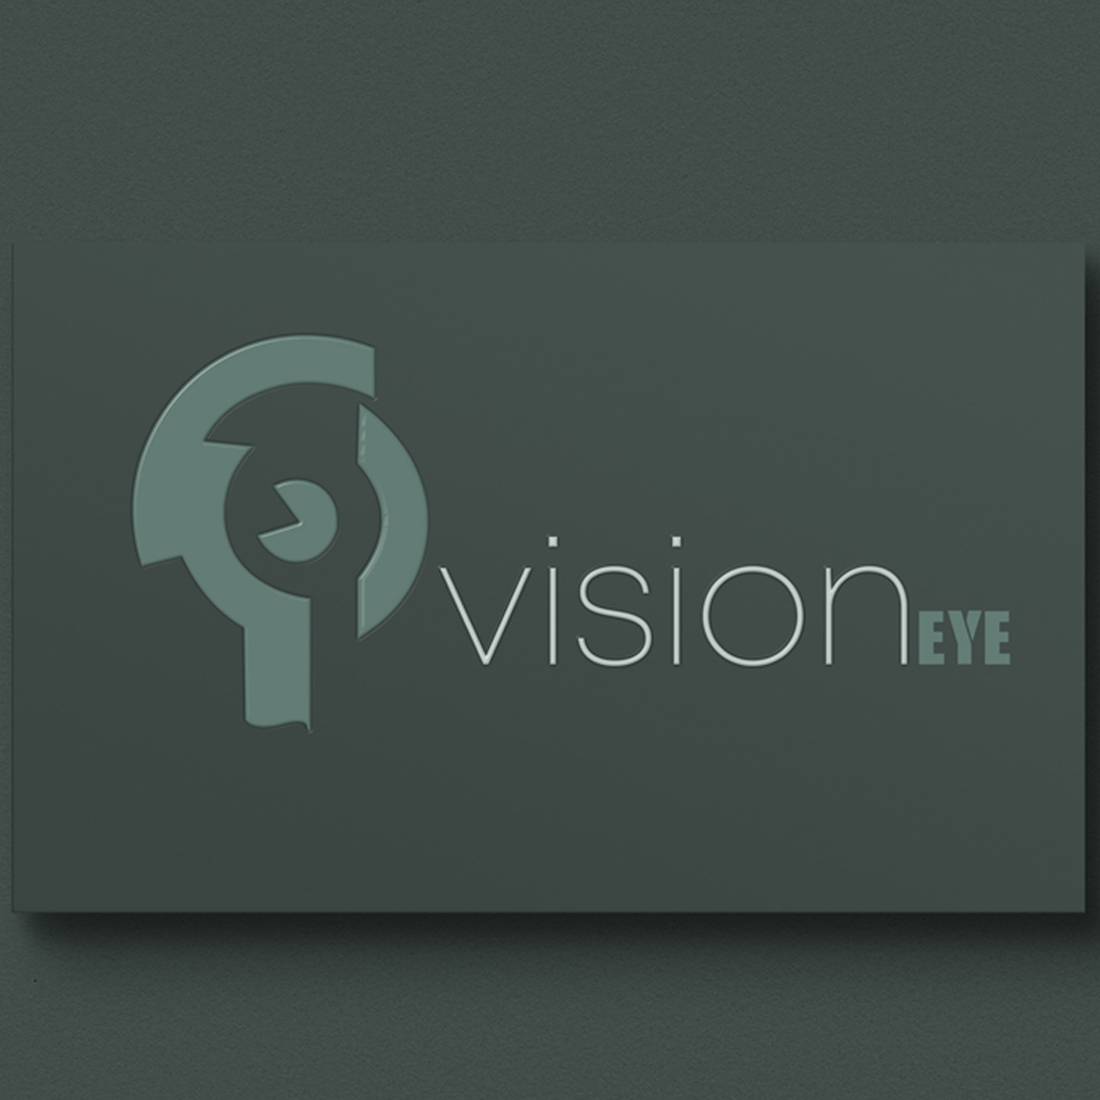 Logo vision eye preview image.